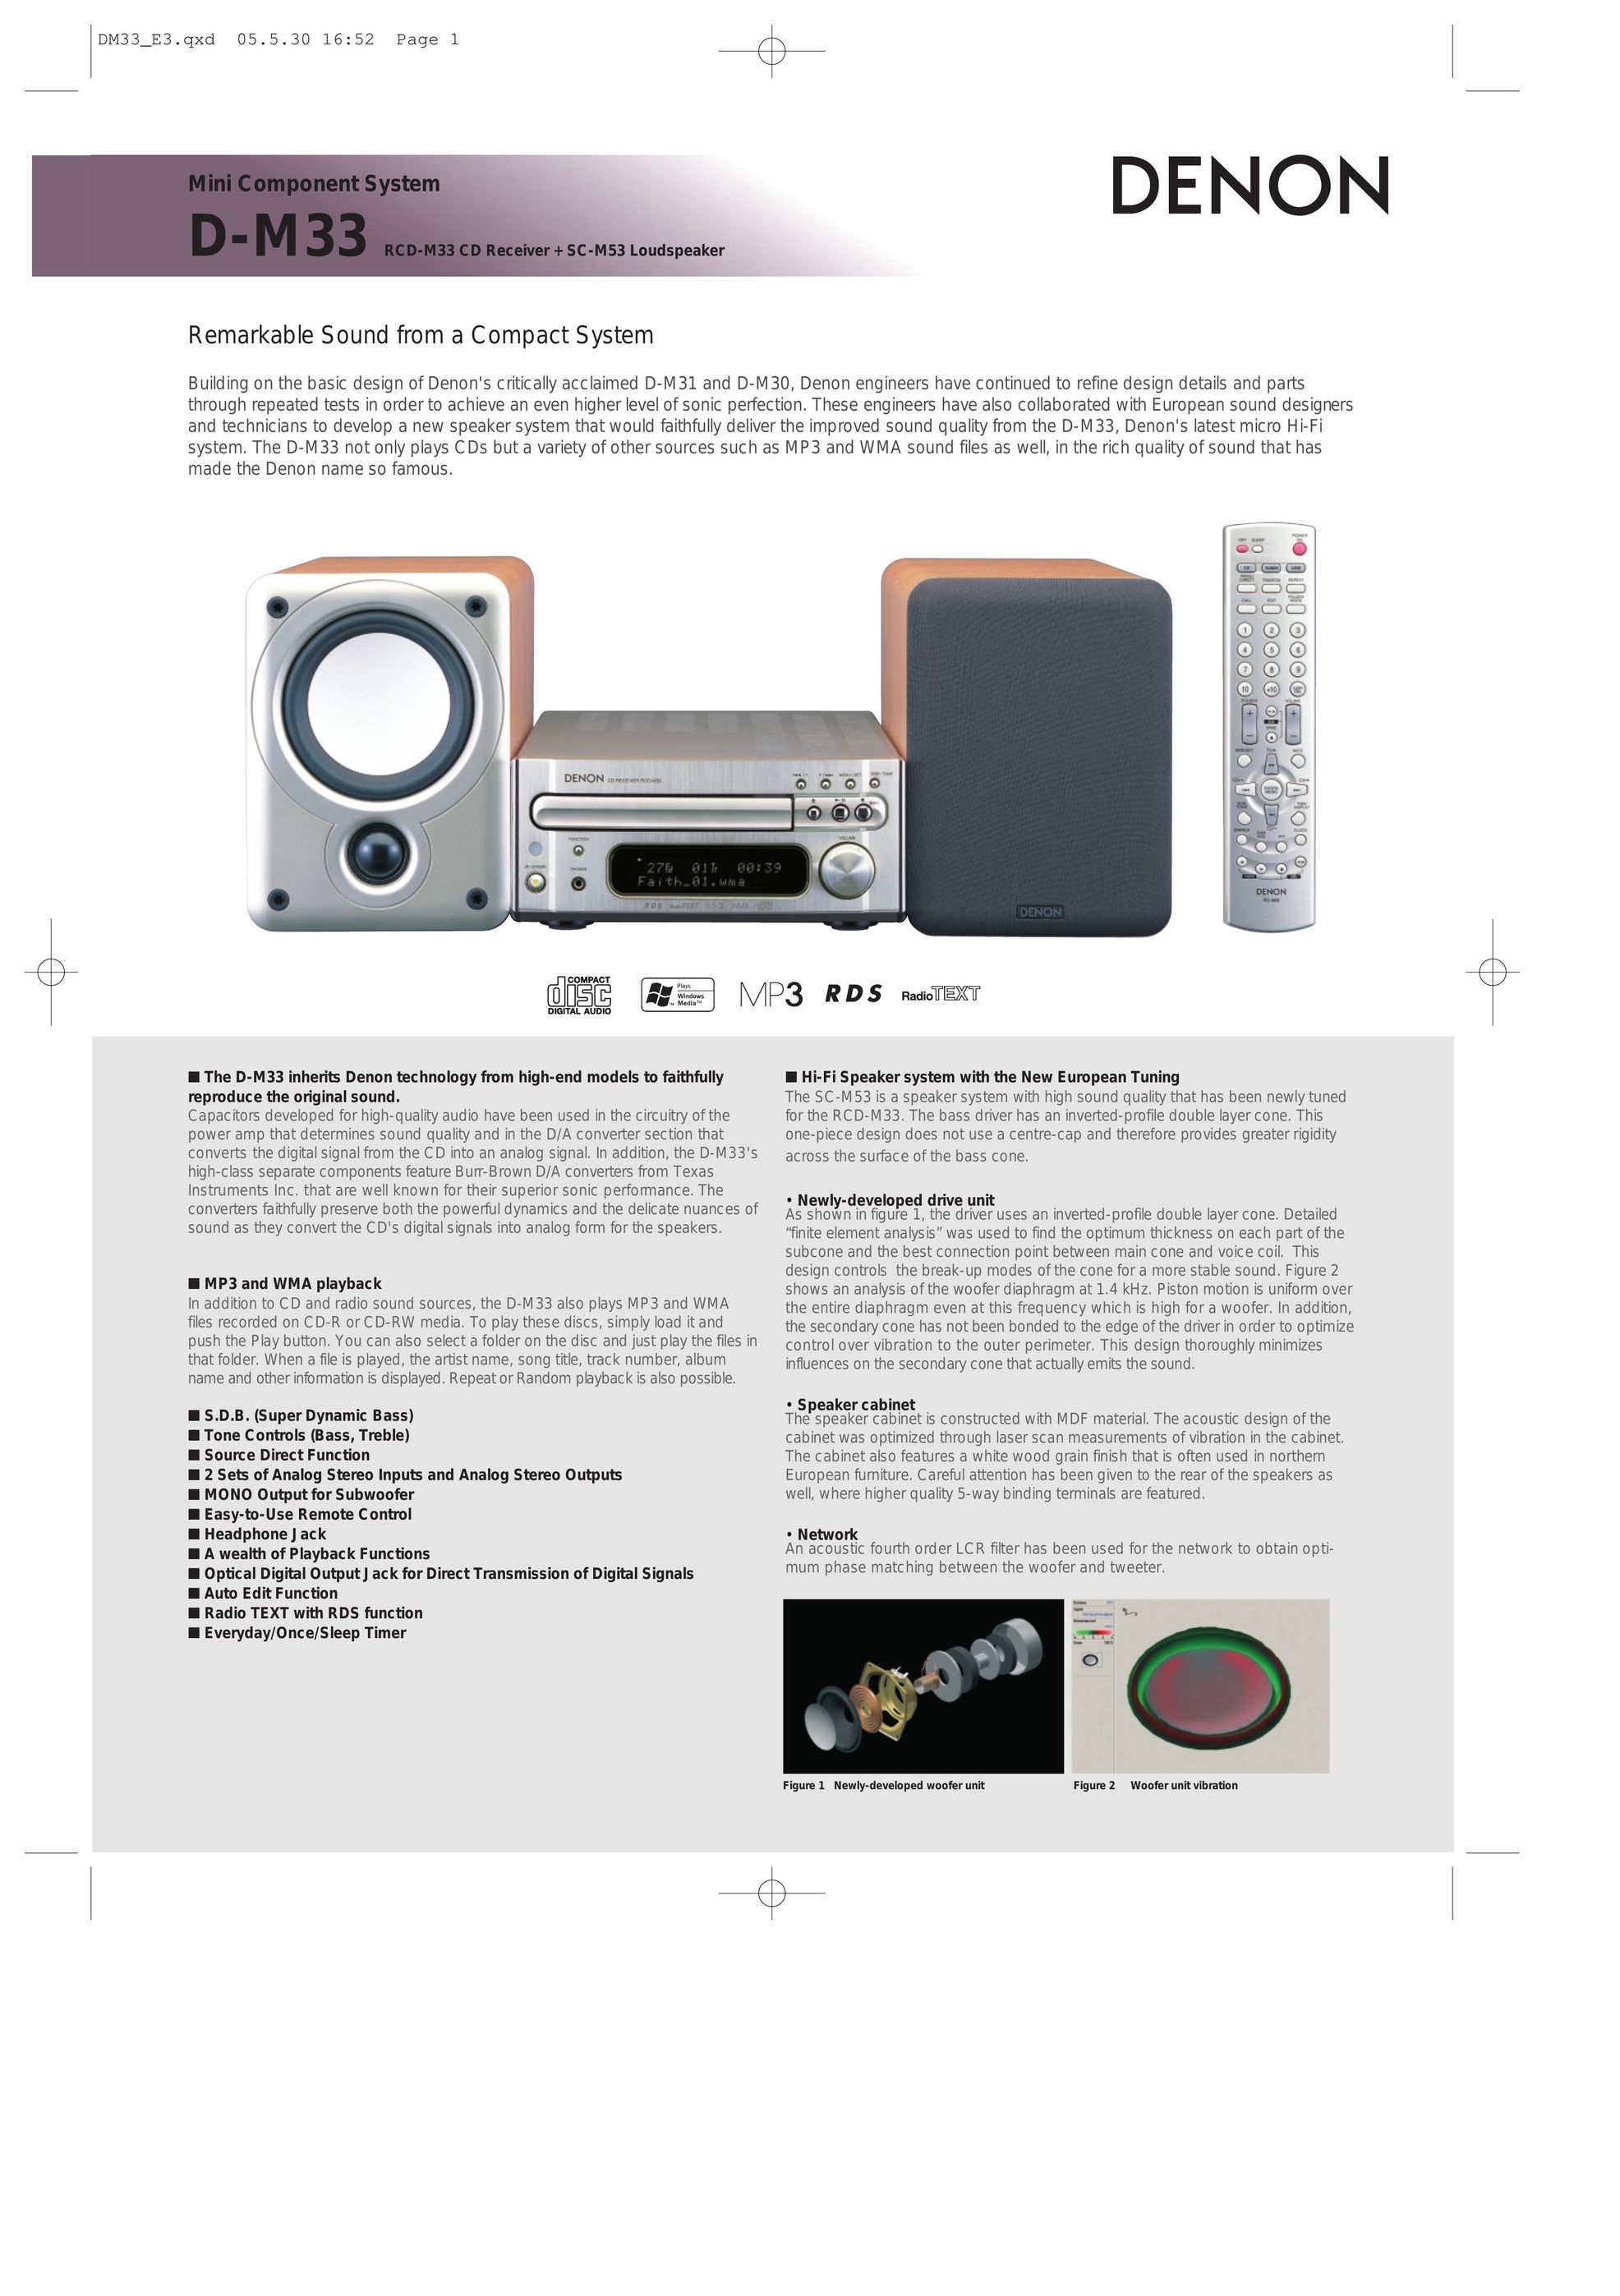 Denon D-M33 Car Stereo System User Manual